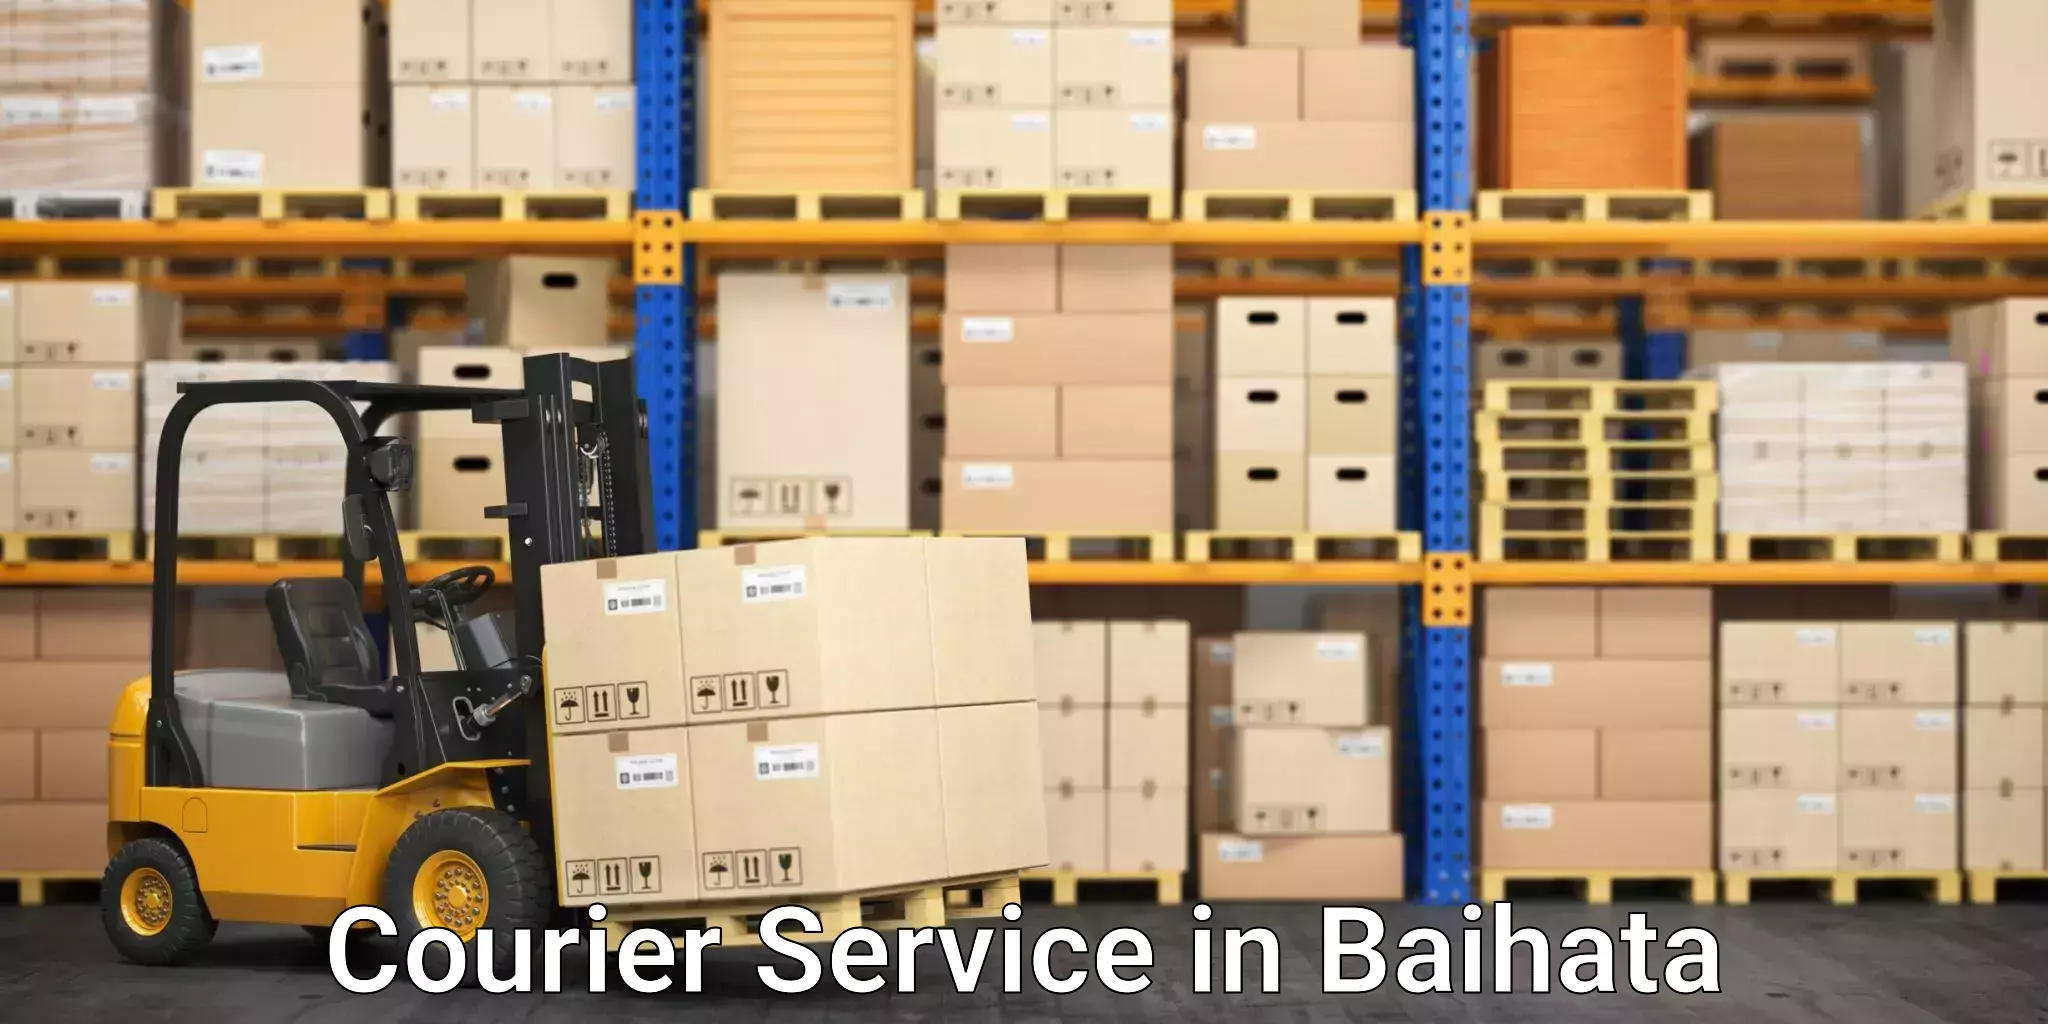 Flexible shipping options in Baihata